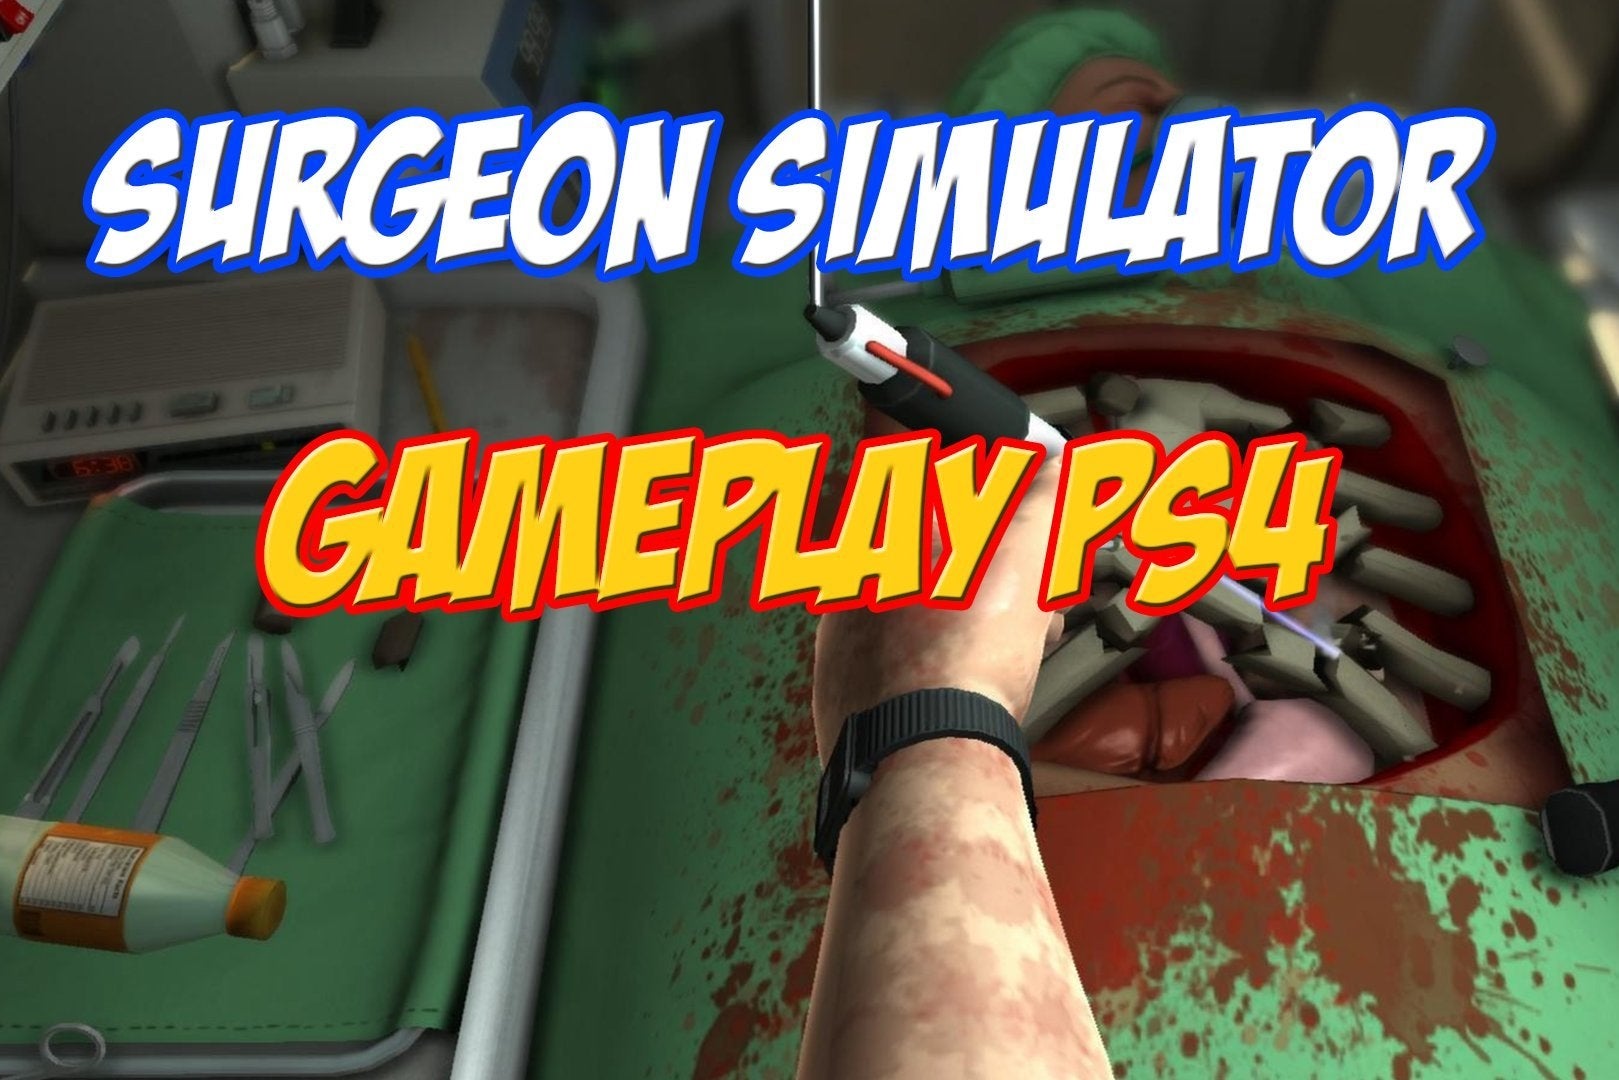 Imagem para Surgeon Simulator - Gameplay PS4